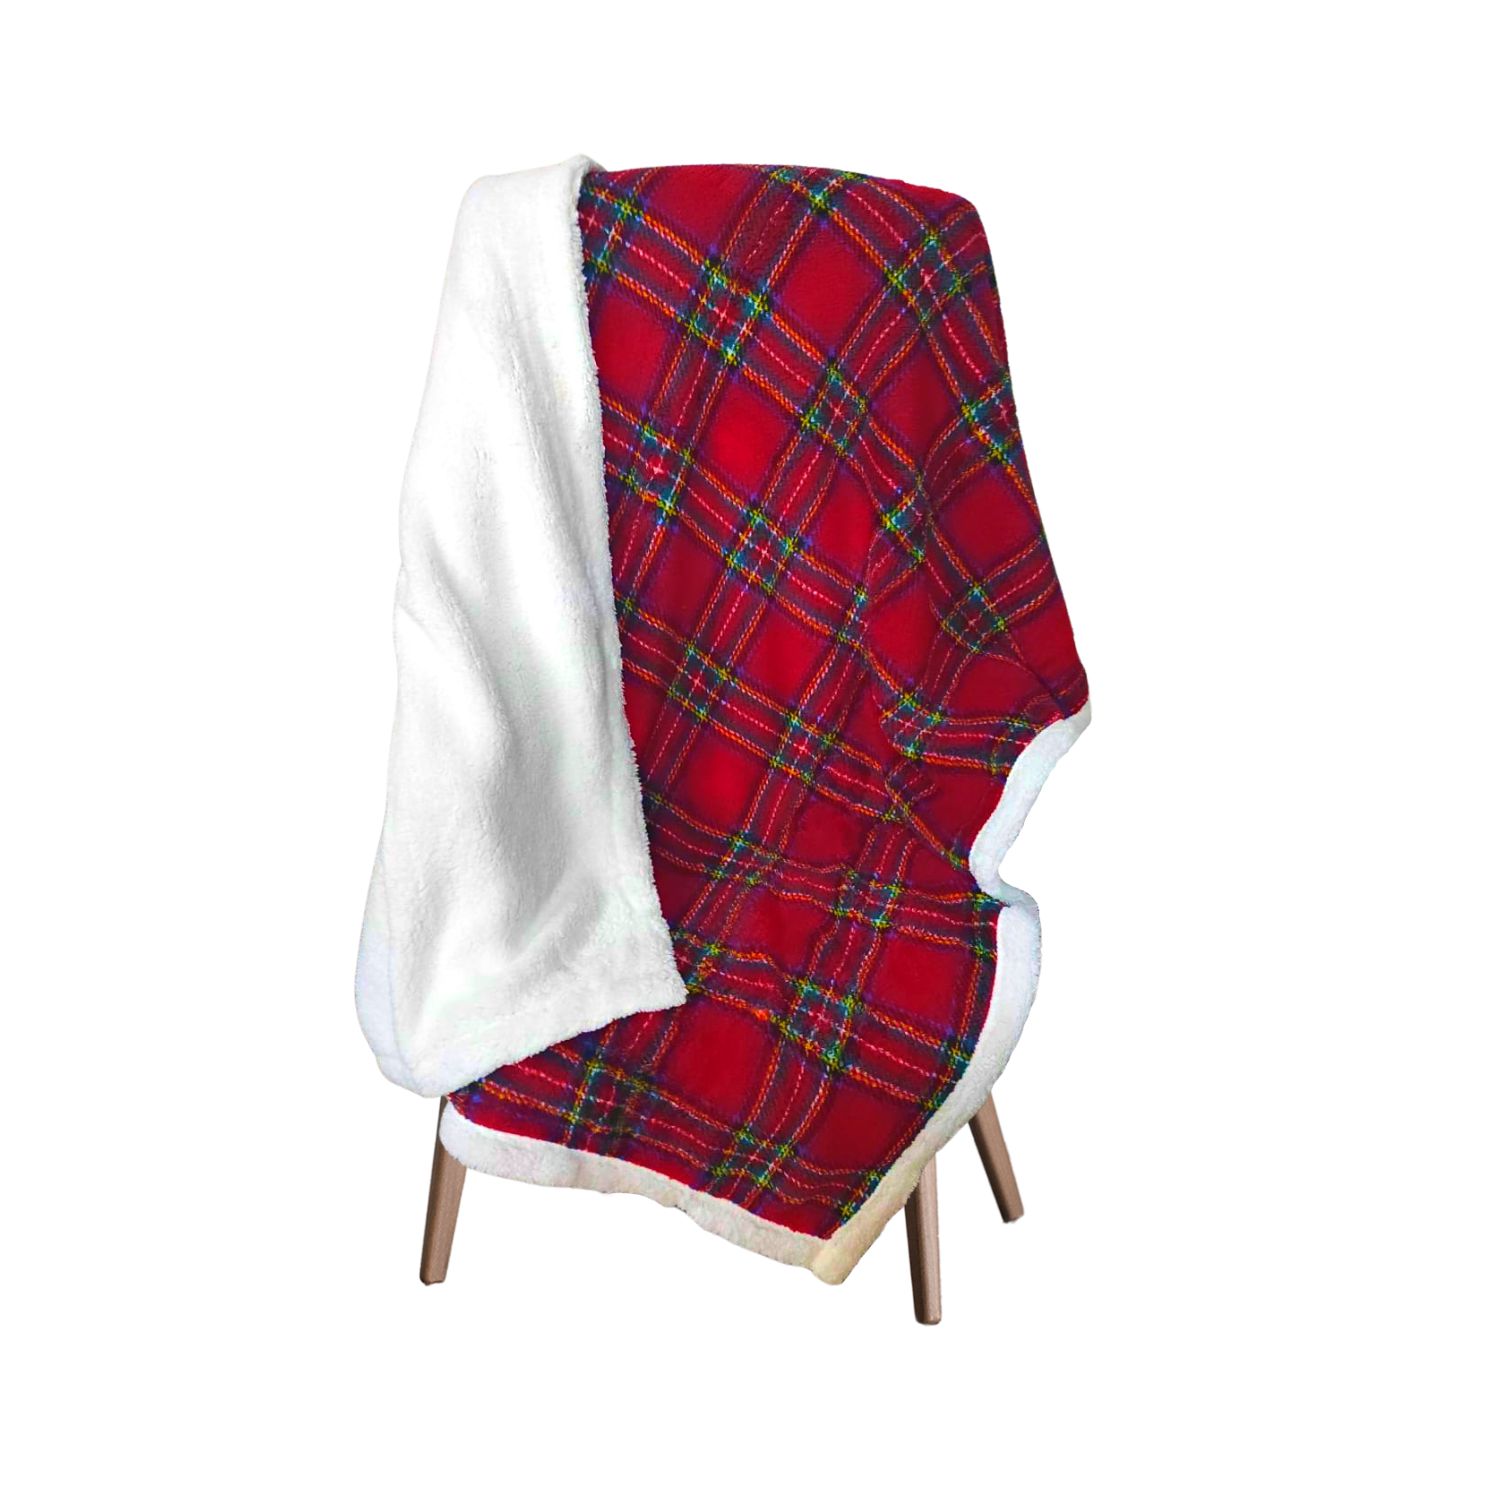 coperta-amburgo-rosso-scozzese-sherpa-calda-morbida-invernale-aperta